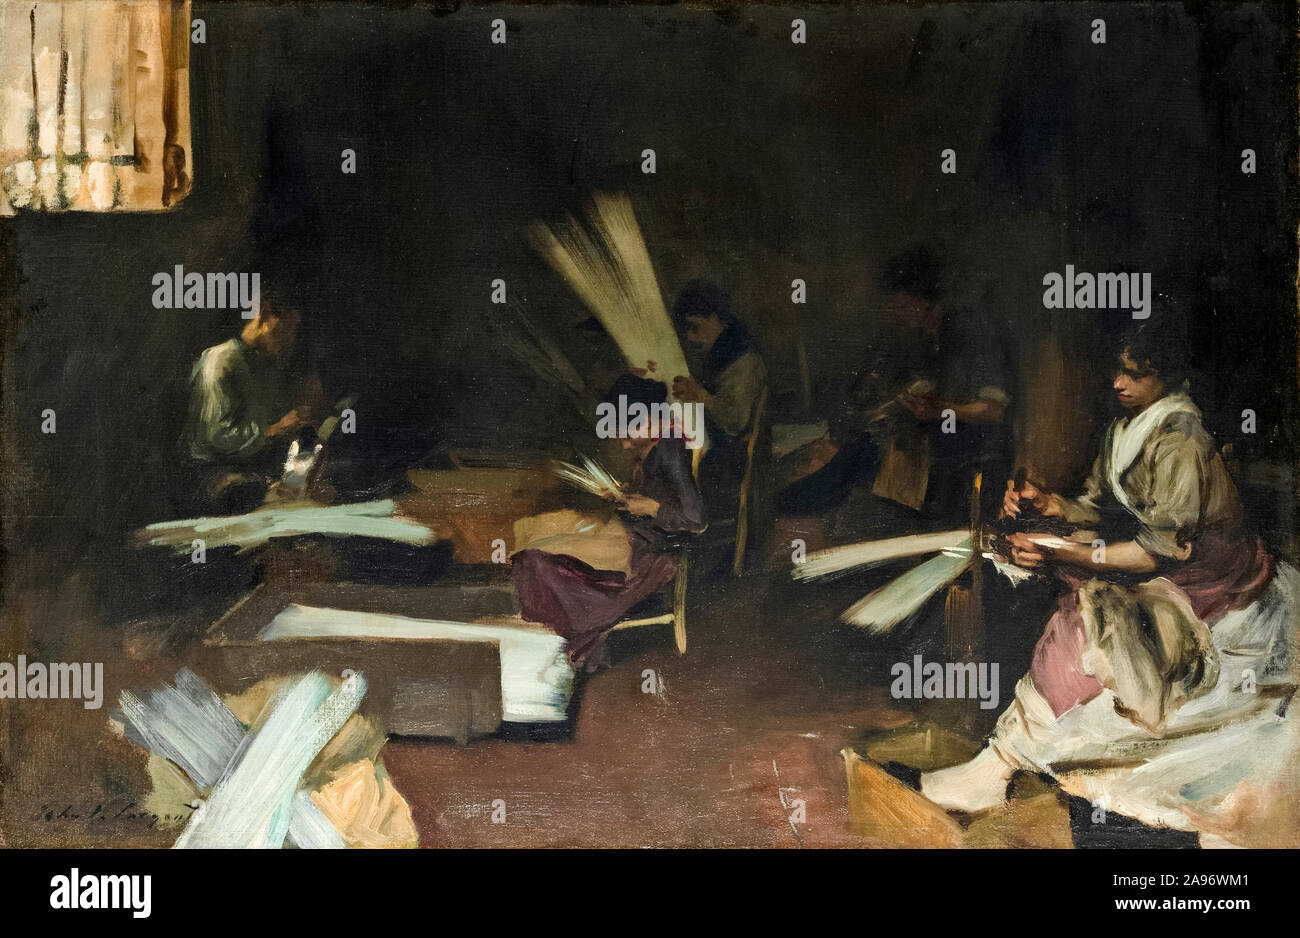 John Singer Sargent, vetro veneziano lavoratori, pittura, 1880-1882 Foto Stock